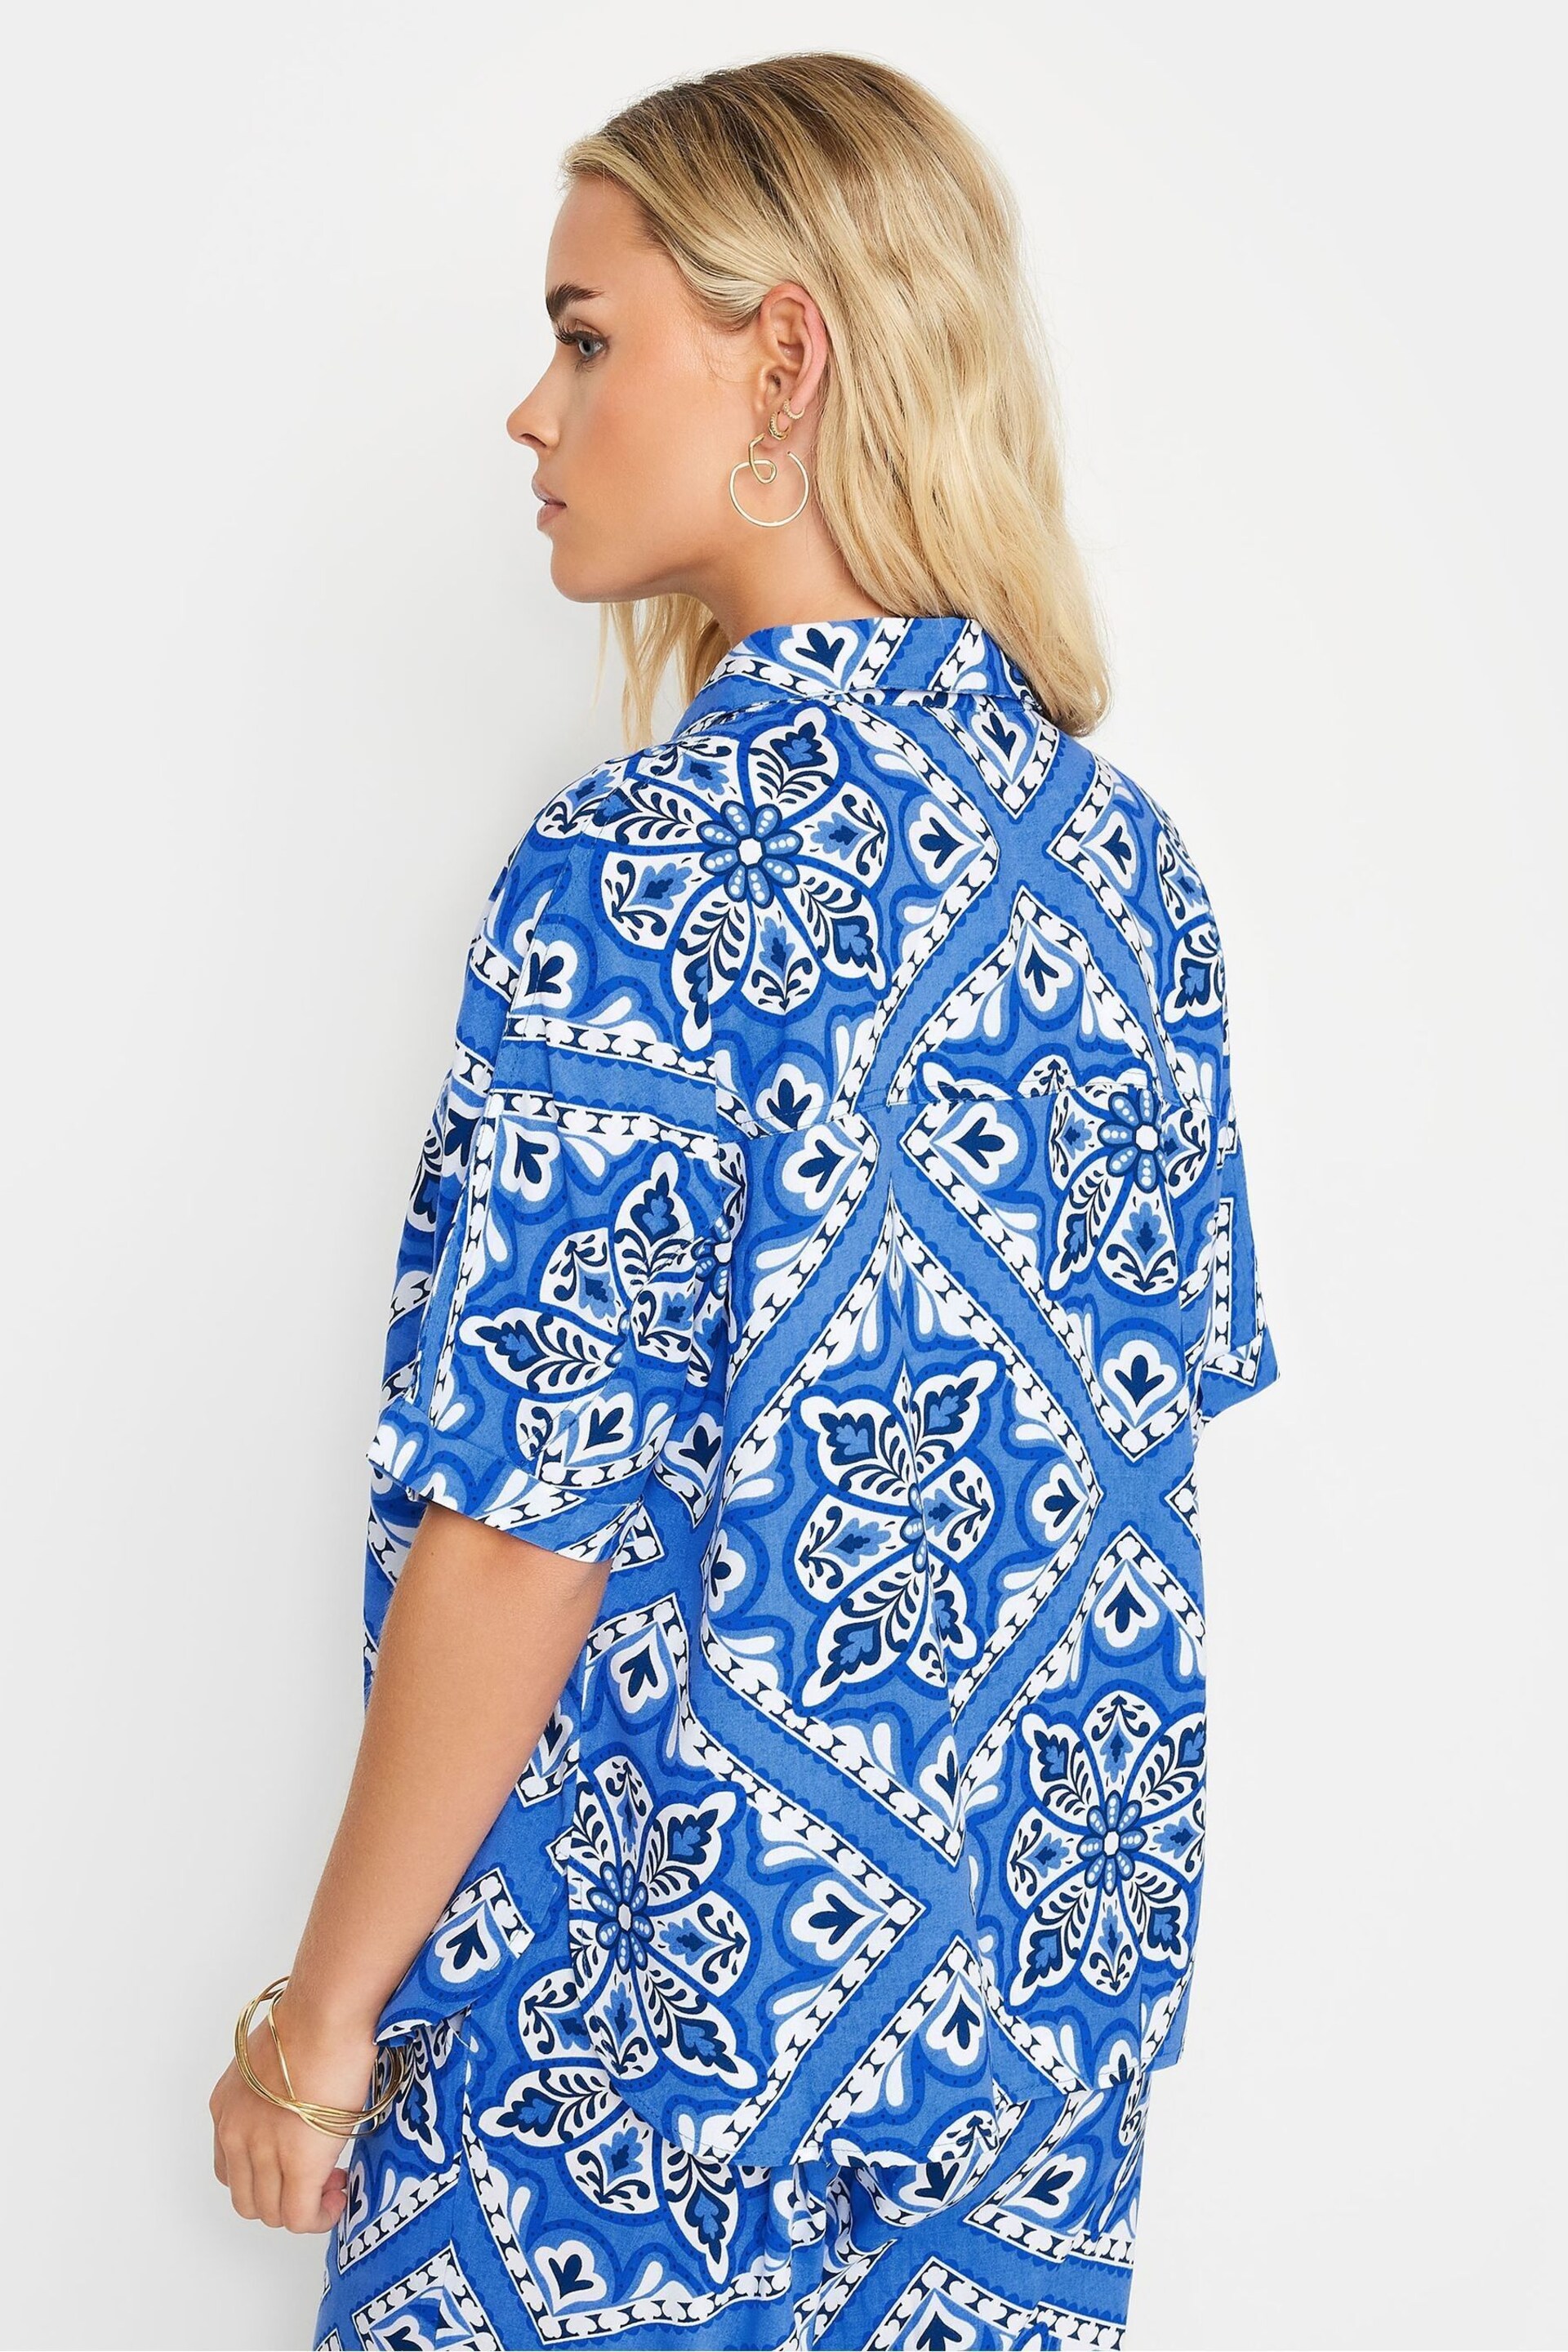 PixieGirl Petite Blue Tile Print Short Sleeve Shirt - Image 4 of 5